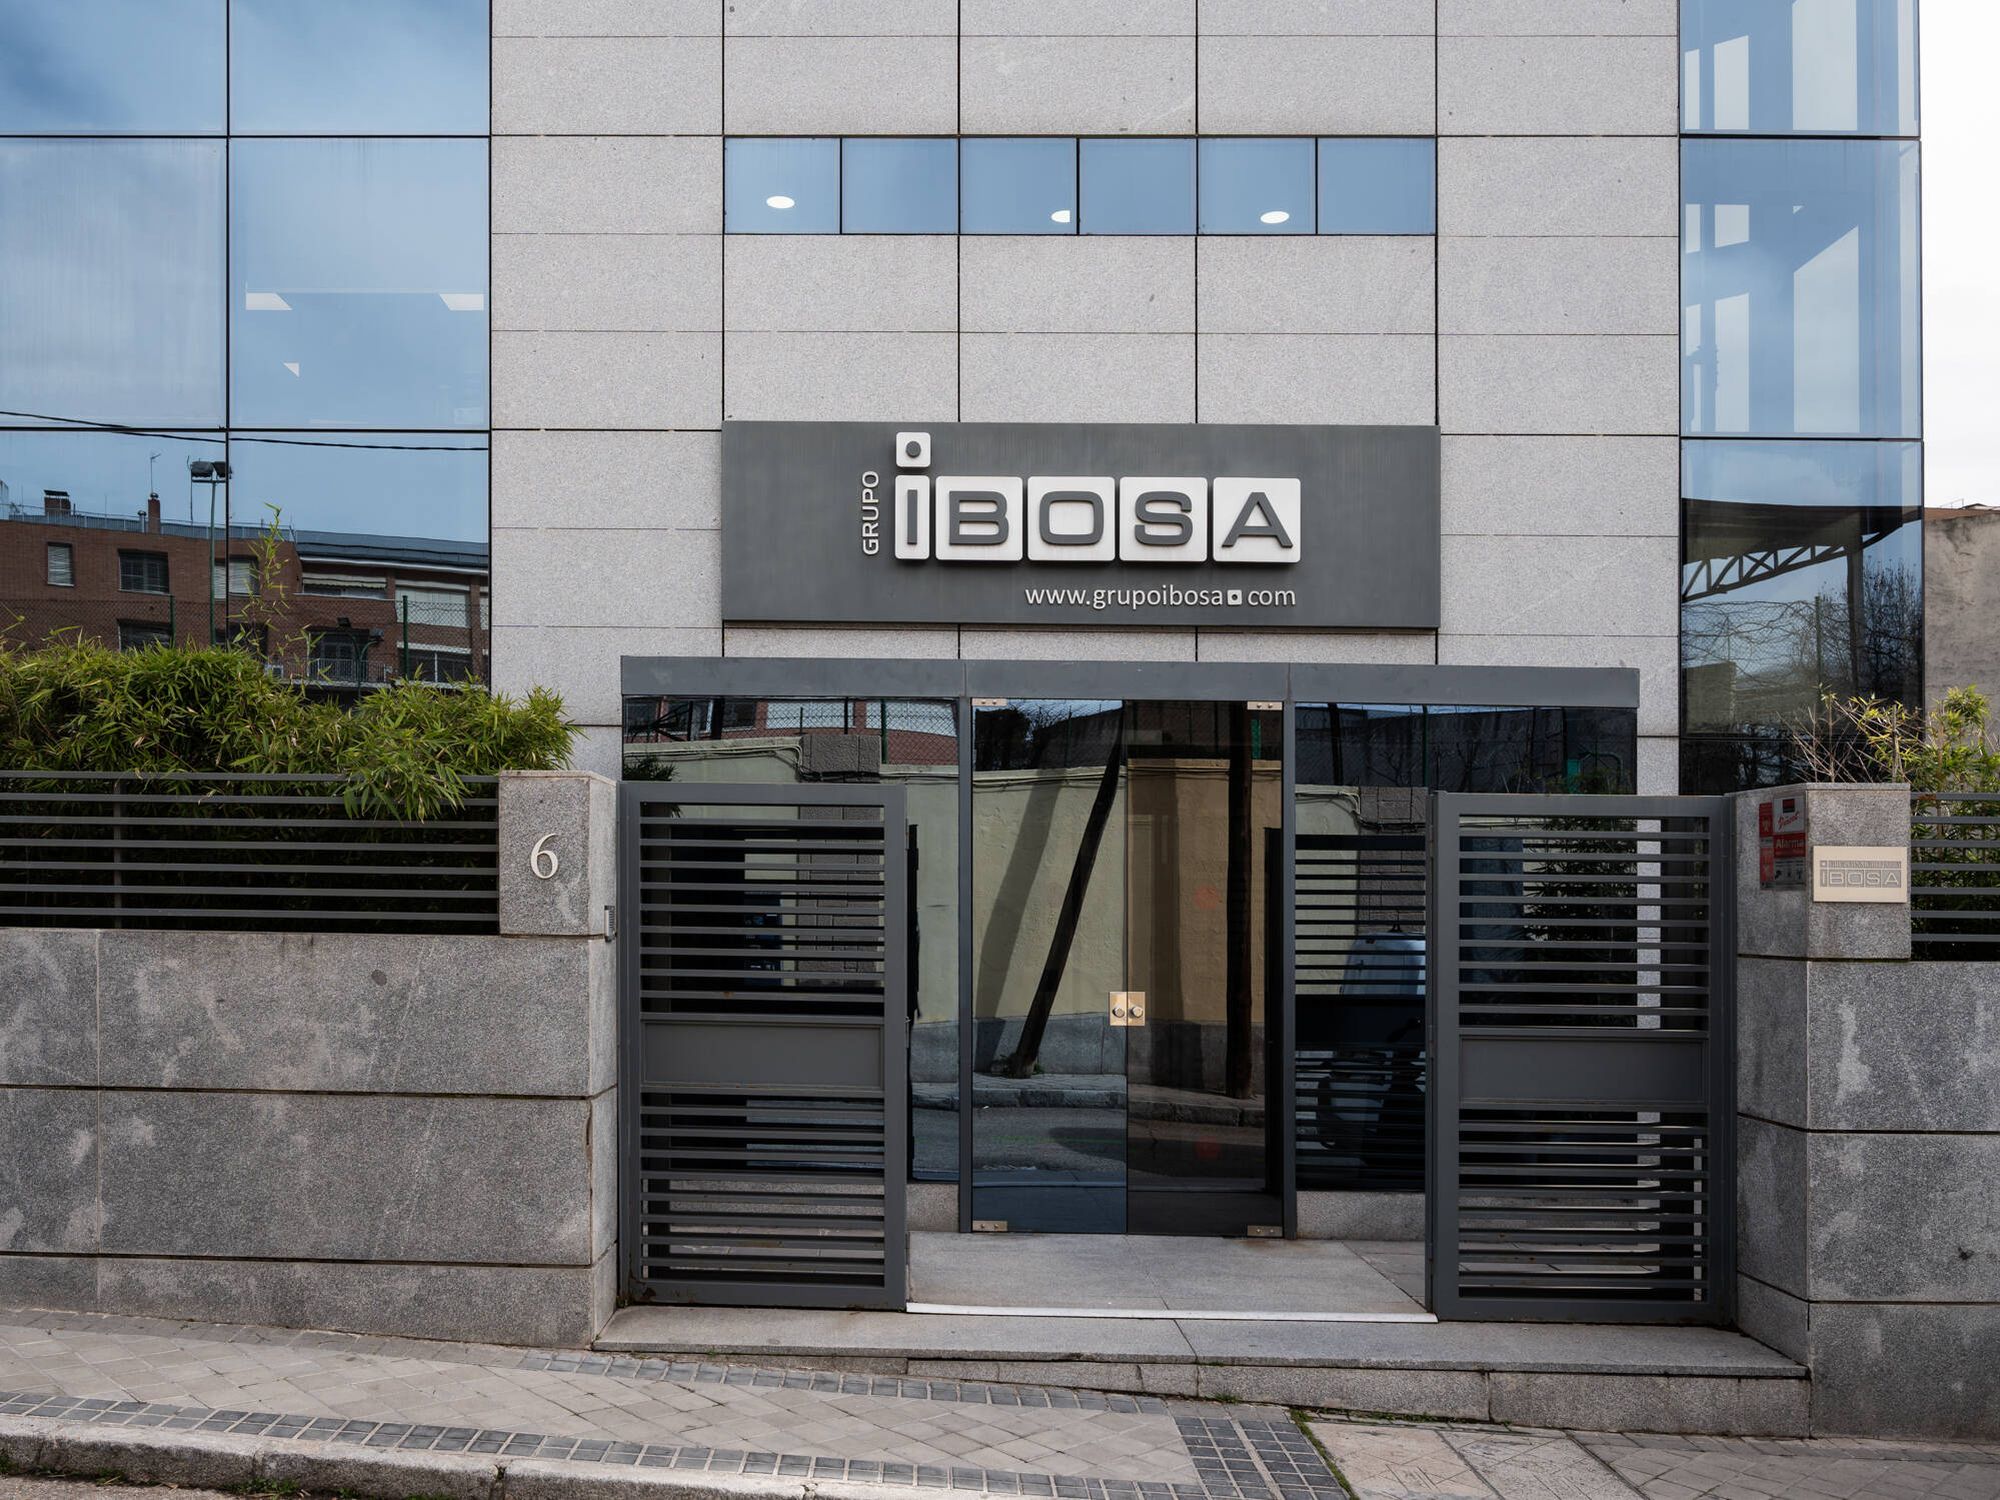 Sede del Grupo Ibosa en Madrid. (J. I. R.)